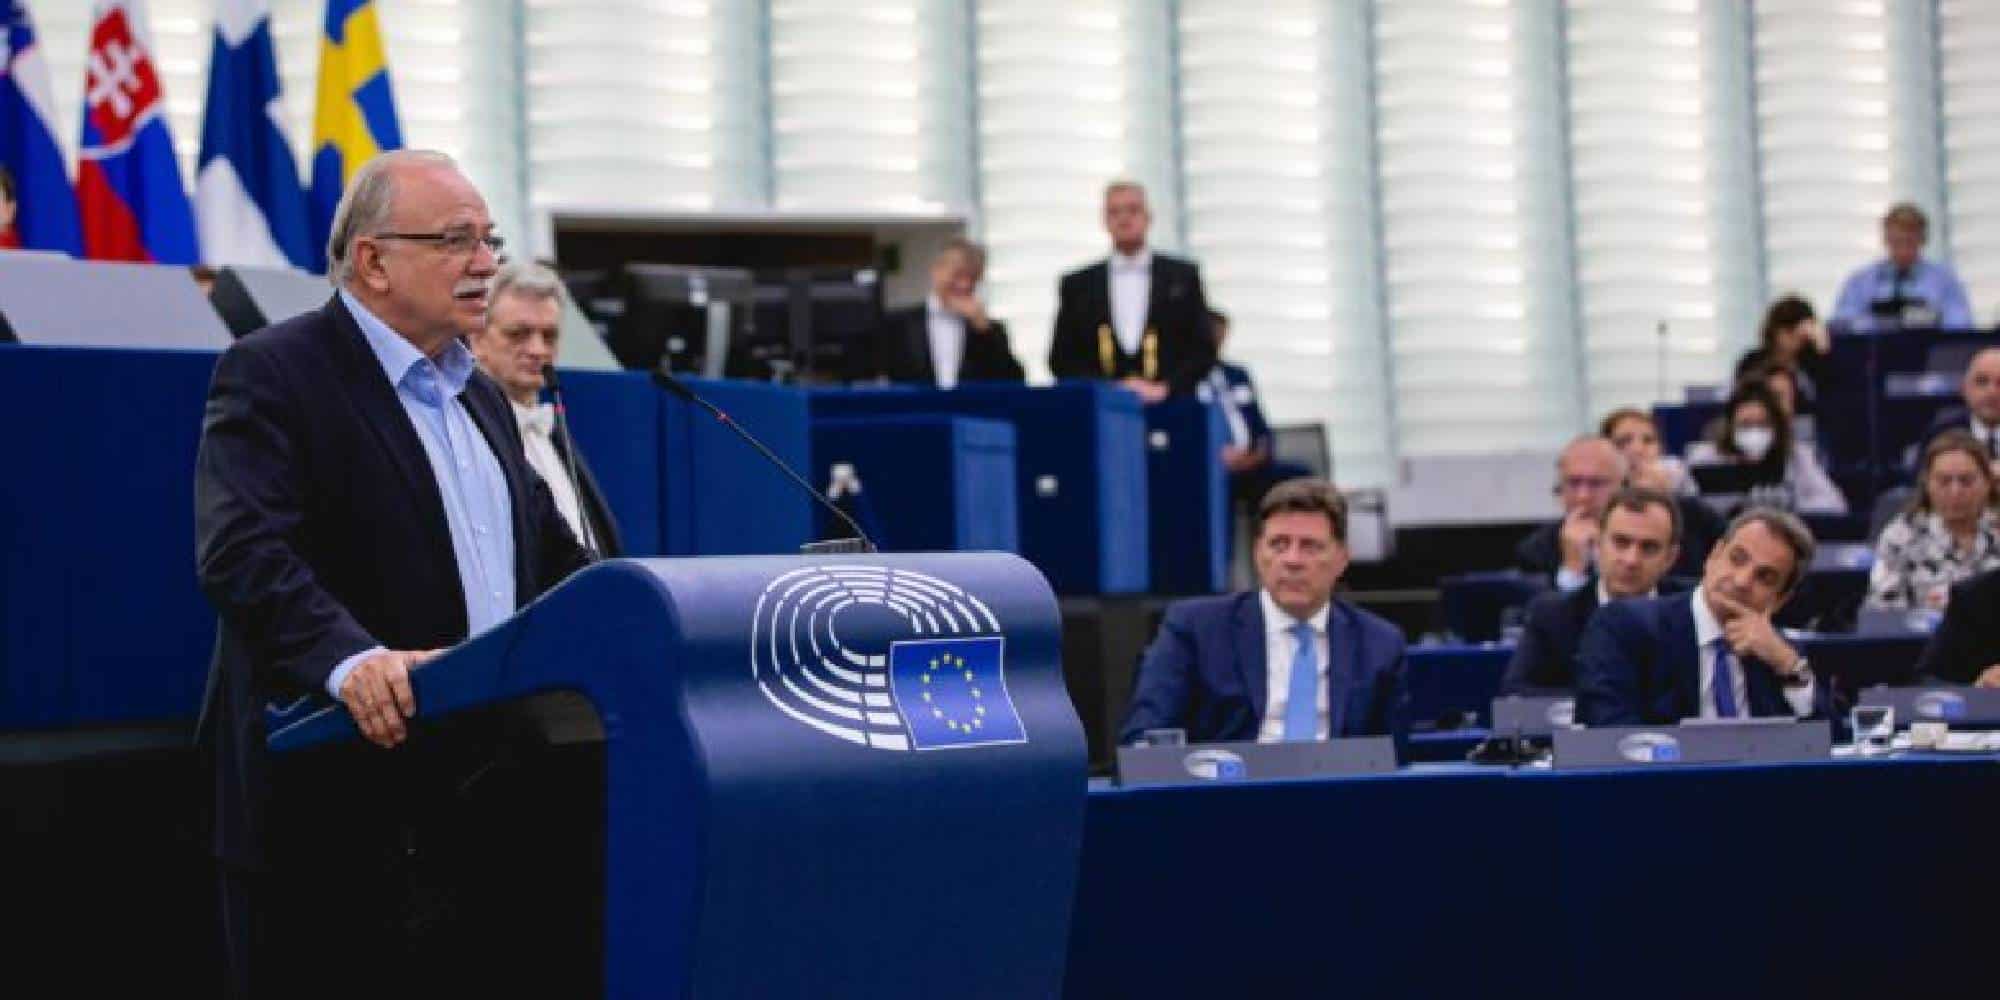 O ευρωβουλευτής του ΣΥΡΙΖΑ Δημήτρης Παπαδημούλης απευθύνεται στο Ευρωκοινοβούλιο στον πρωθυπουργό Κυριάκο Μητσοτάκη